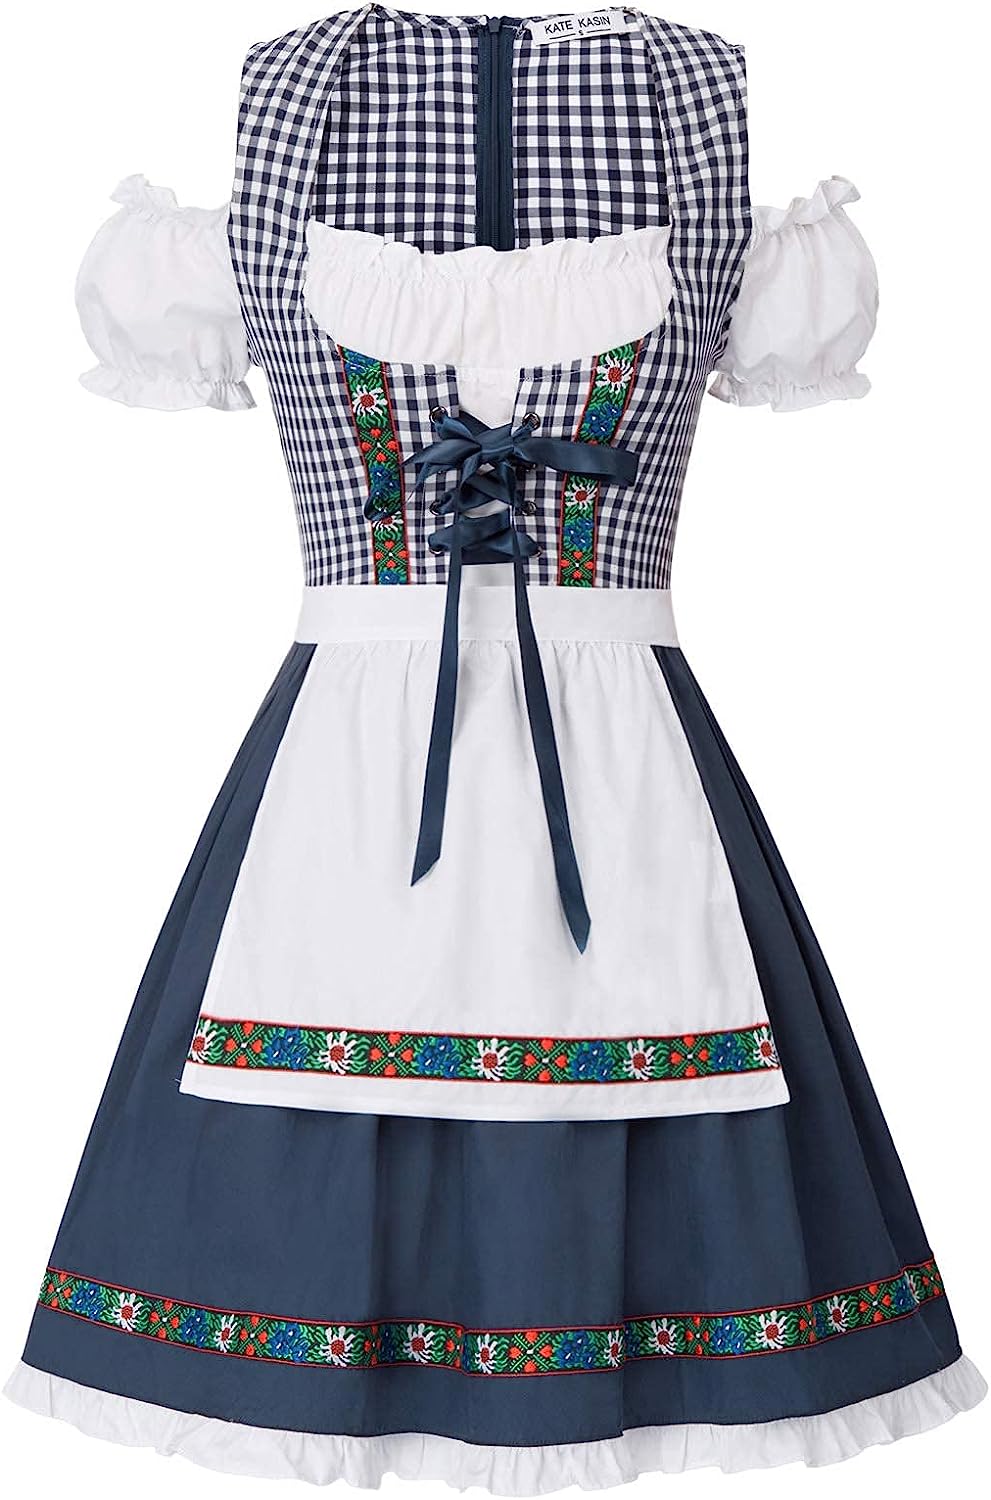 Women's German Dirndl Dress Costumes for Traditional Bavarian